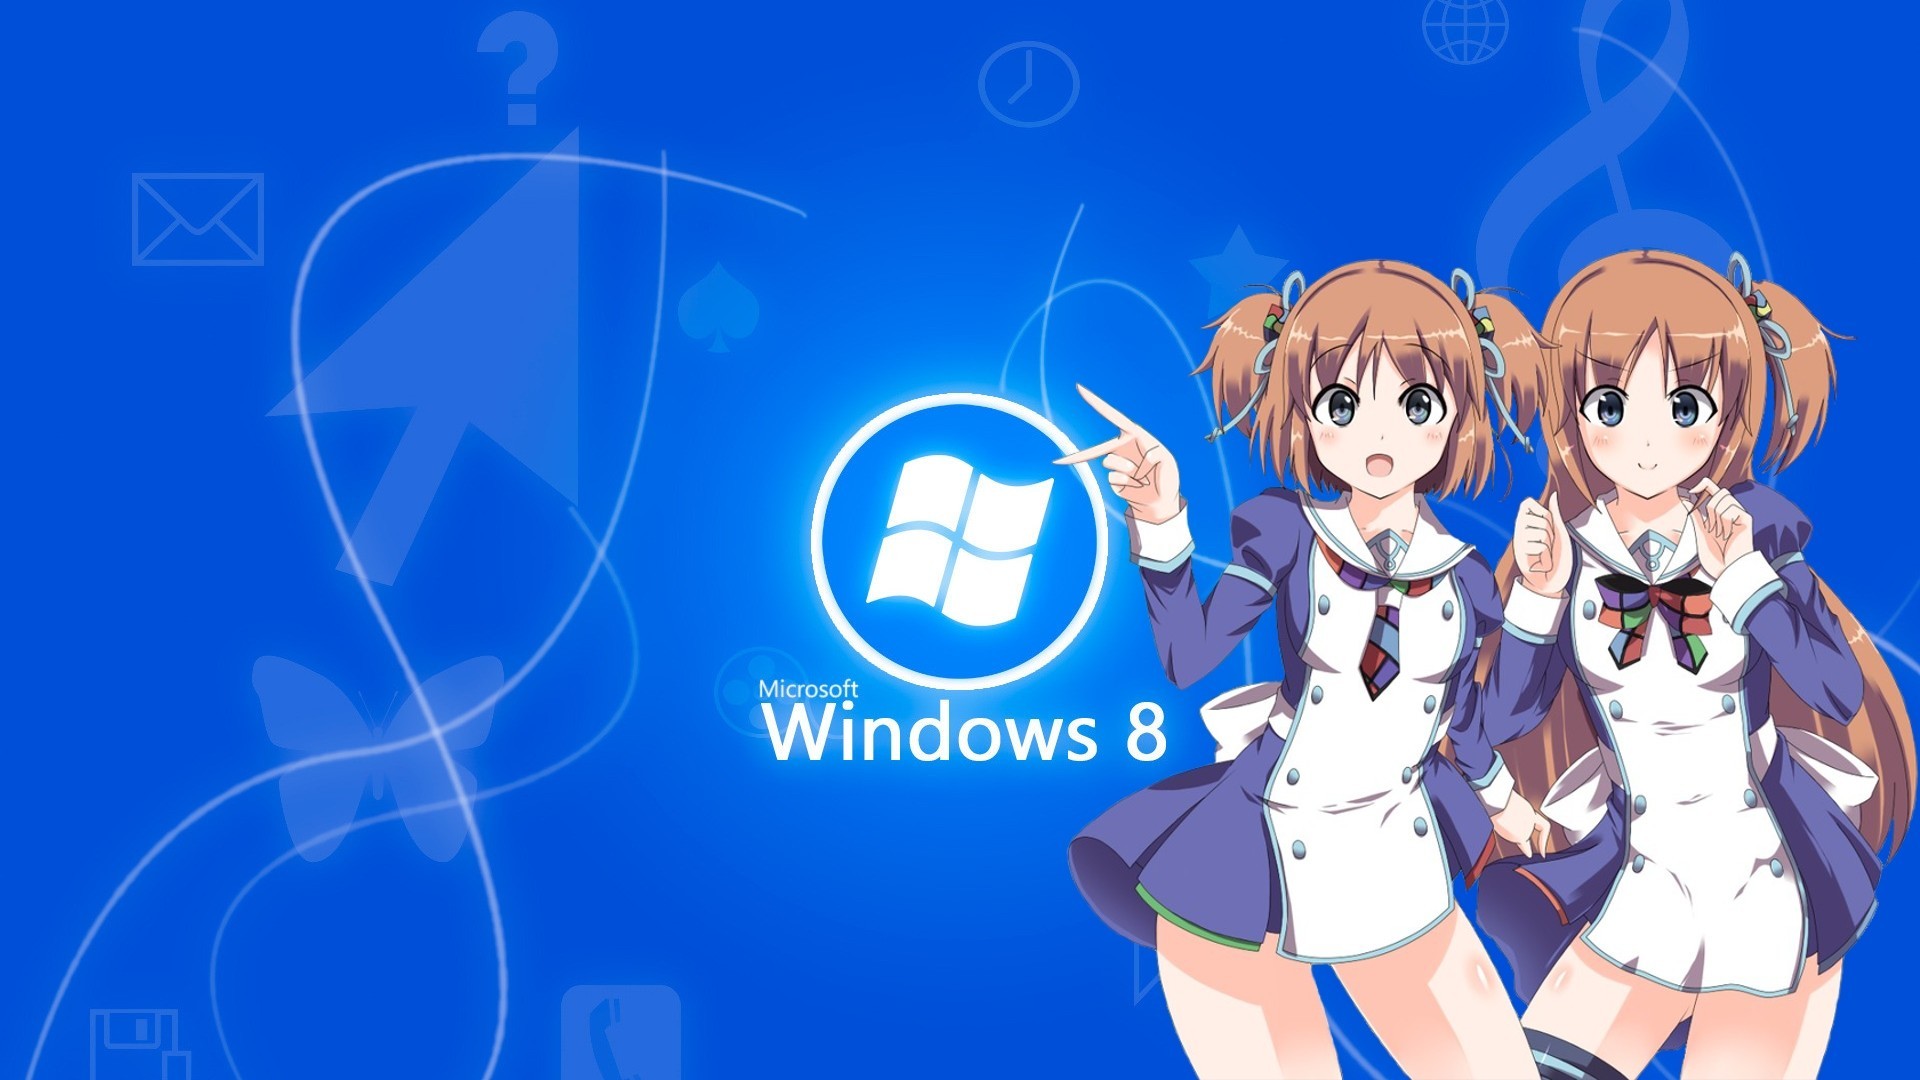 Anime Wallpaper For Windows 8 (83+ images)